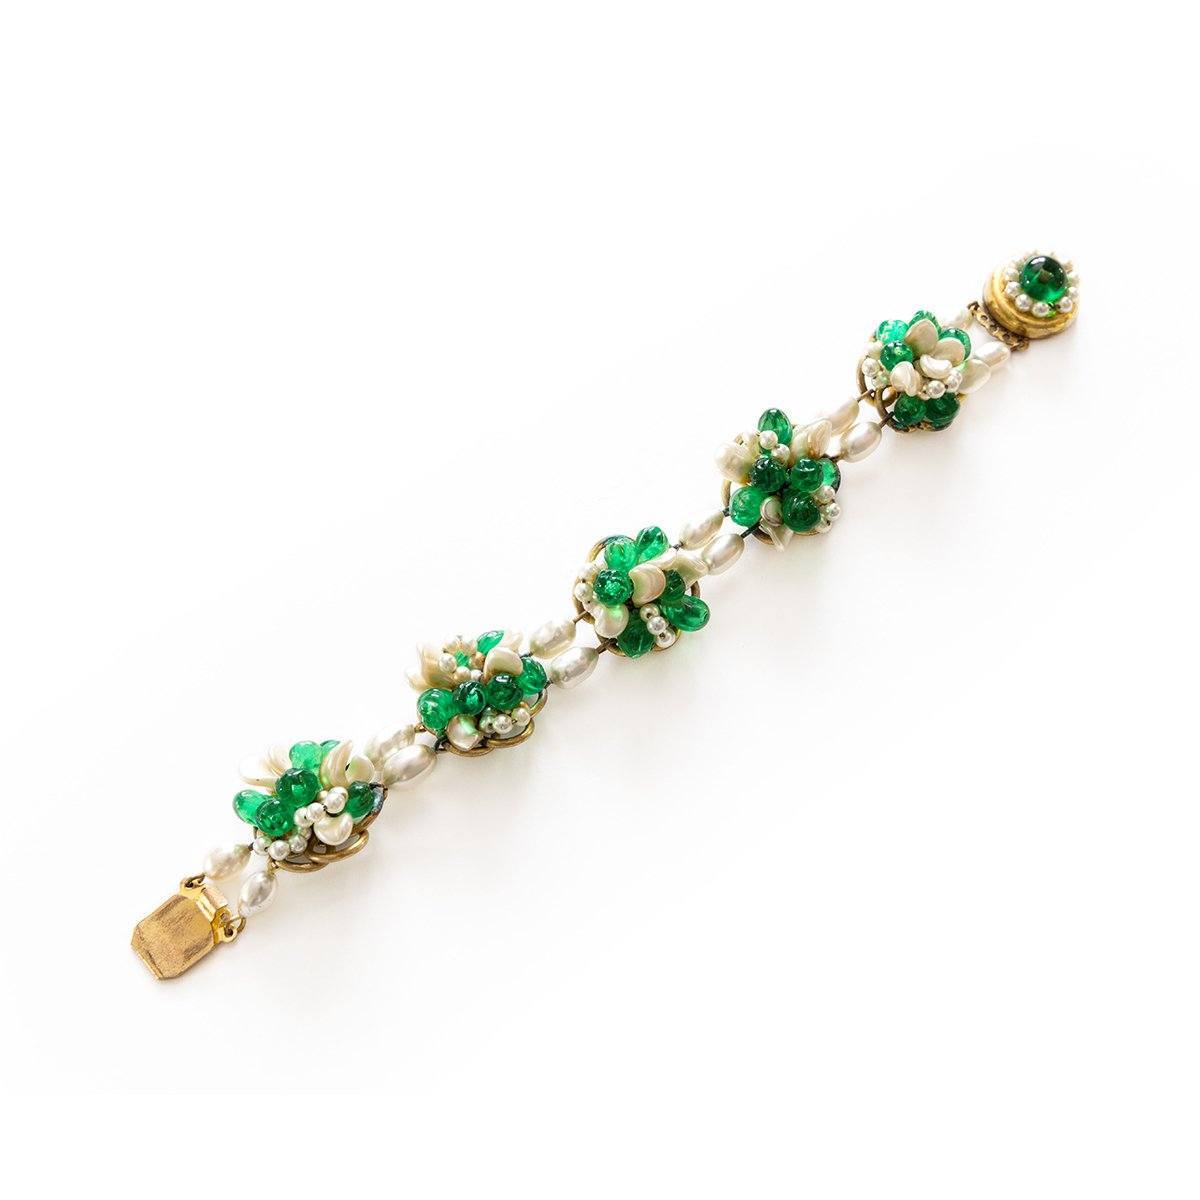 1950s Signed Louis Rousselet Freshwater Pearls & Green Glass Bracelet